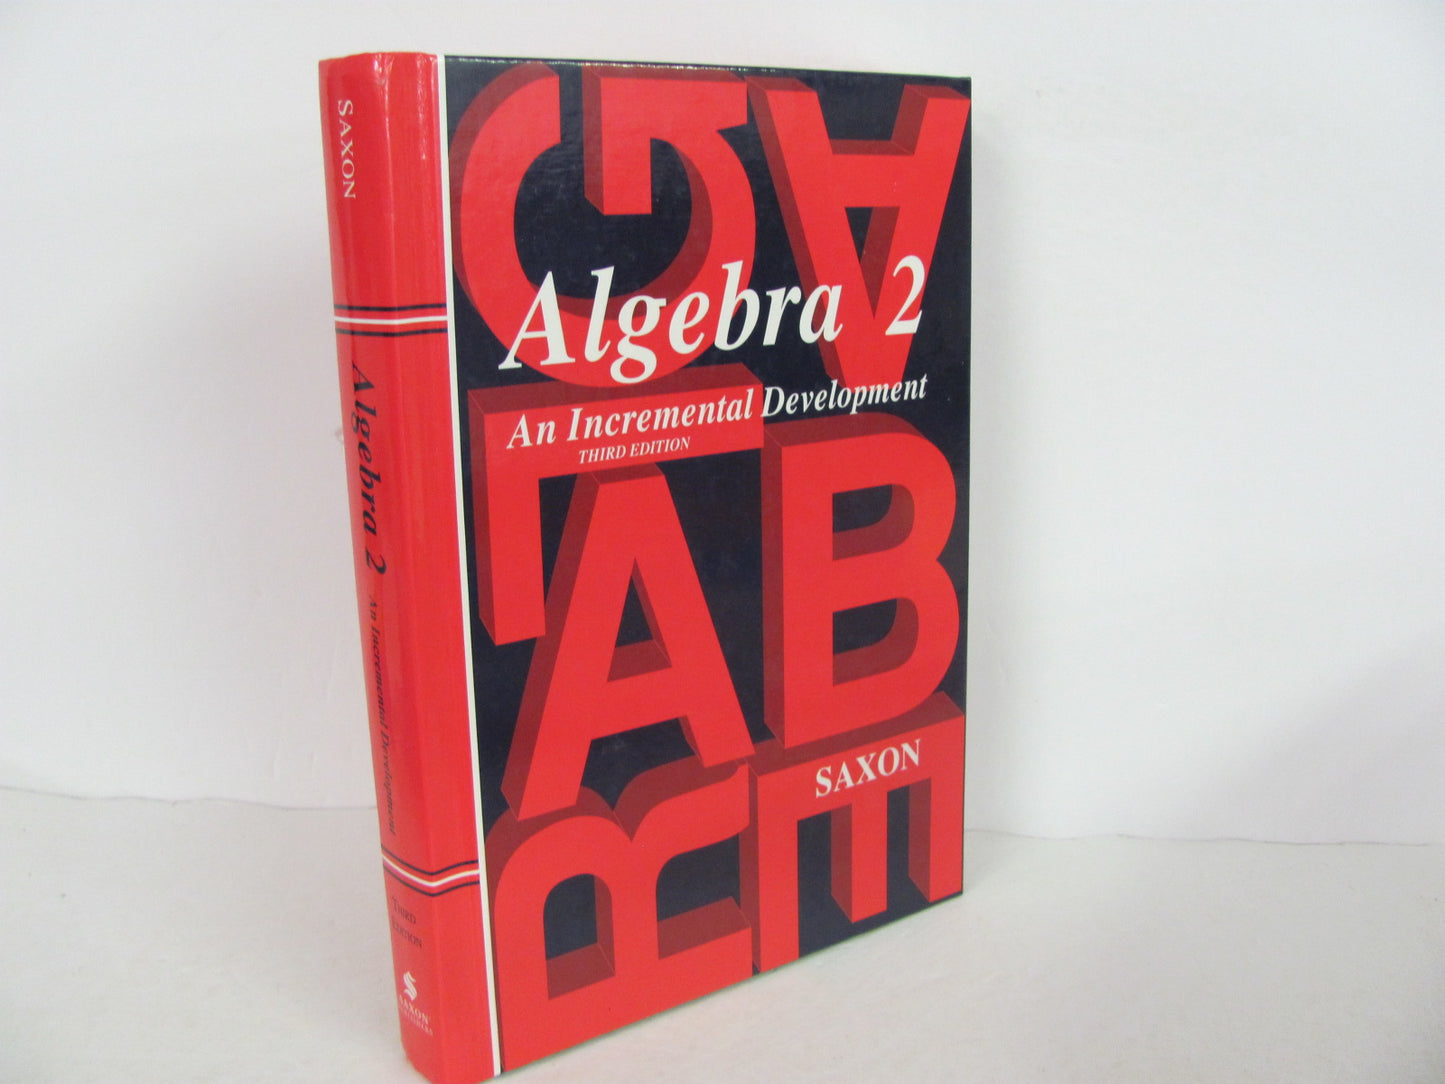 Algebra 2 Saxon Student Book Used High School Mathematics Textbooks